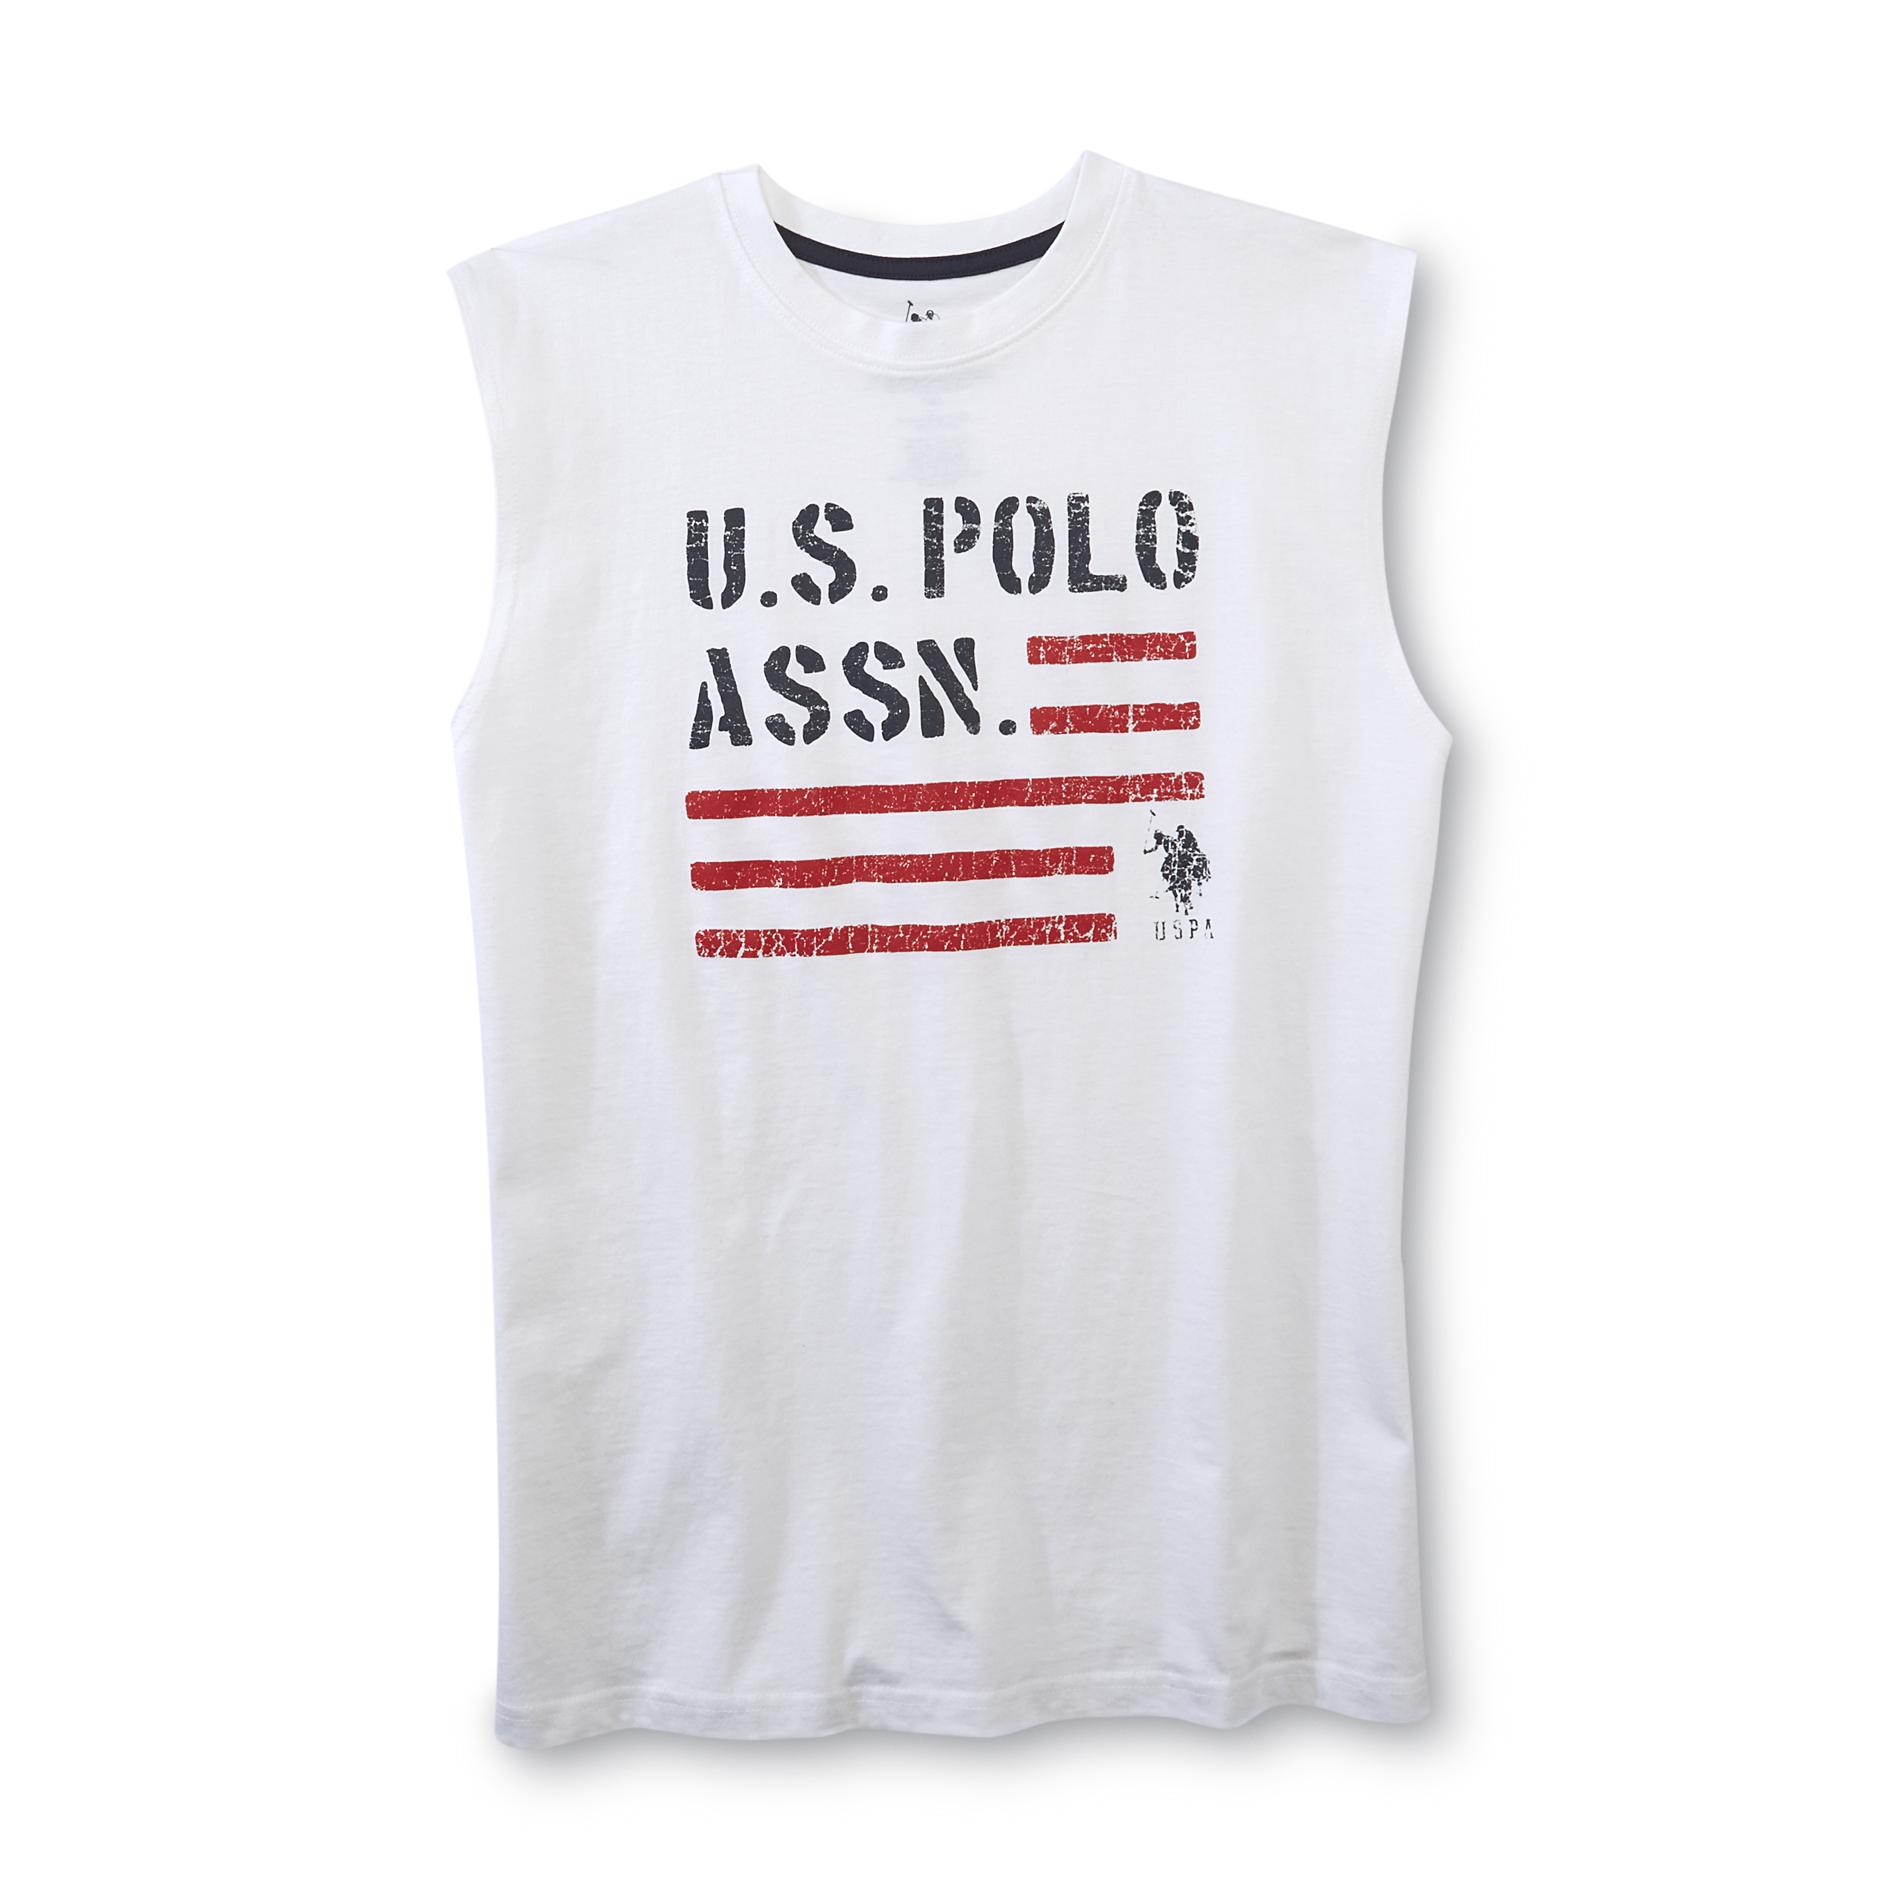 U.S. Polo Assn. Men's Muscle Tee - Americana